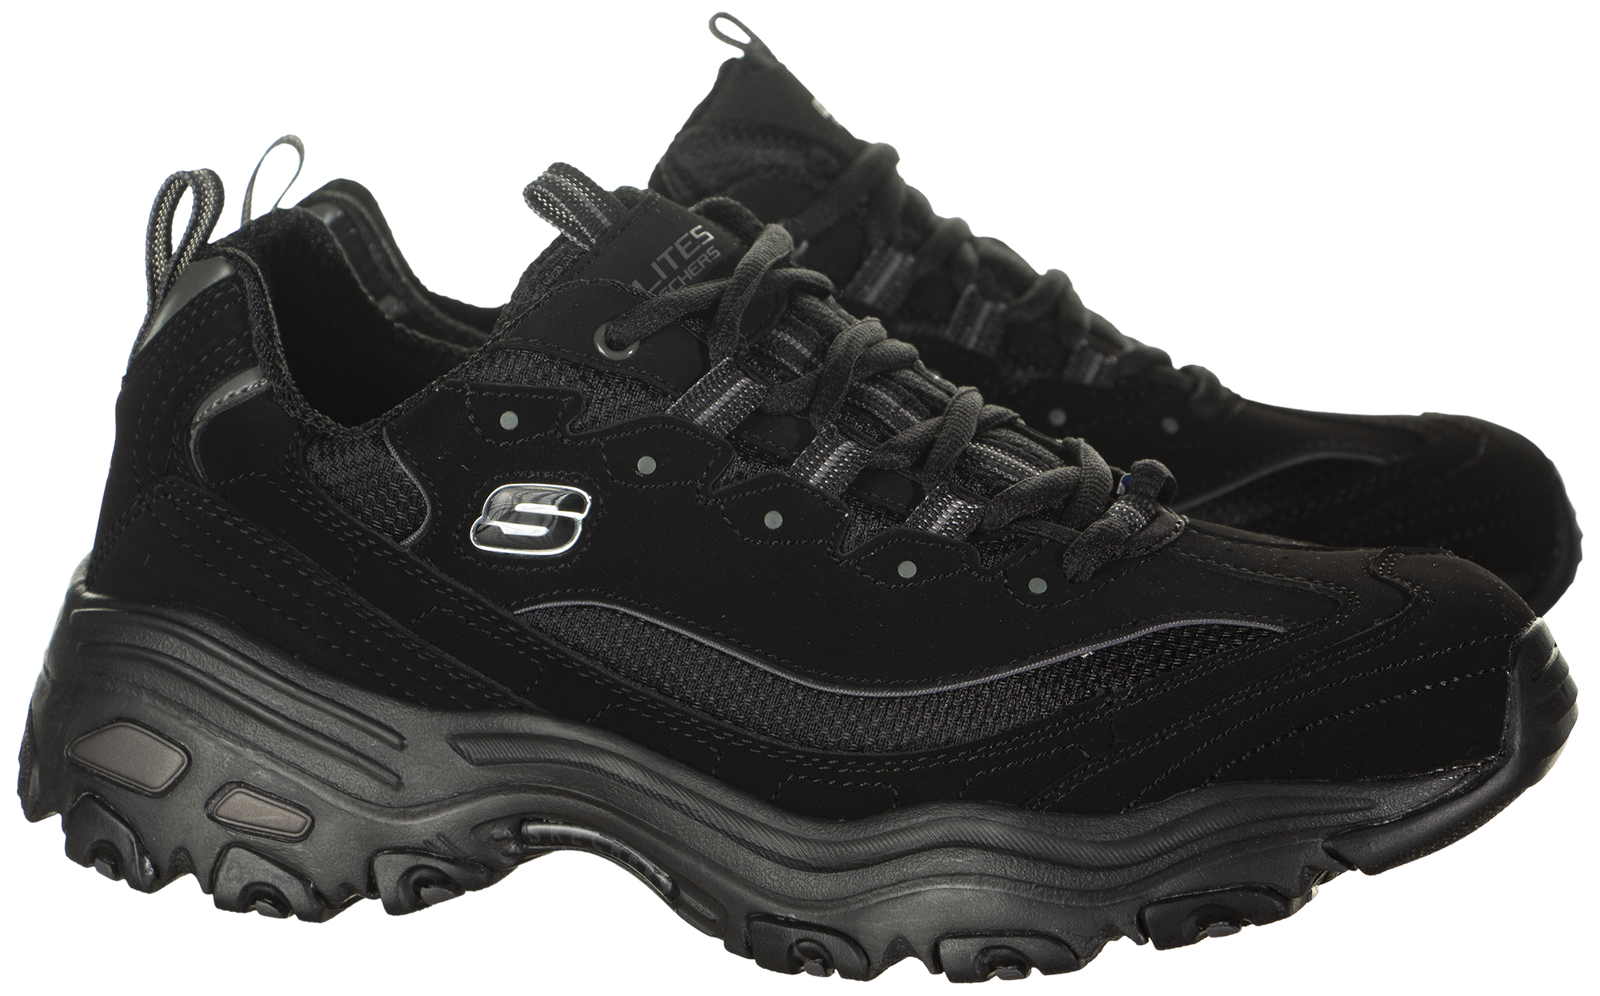 Skechers D'Lites - 52675-bbk - Sneakerhead.com – SNEAKERHEAD.com